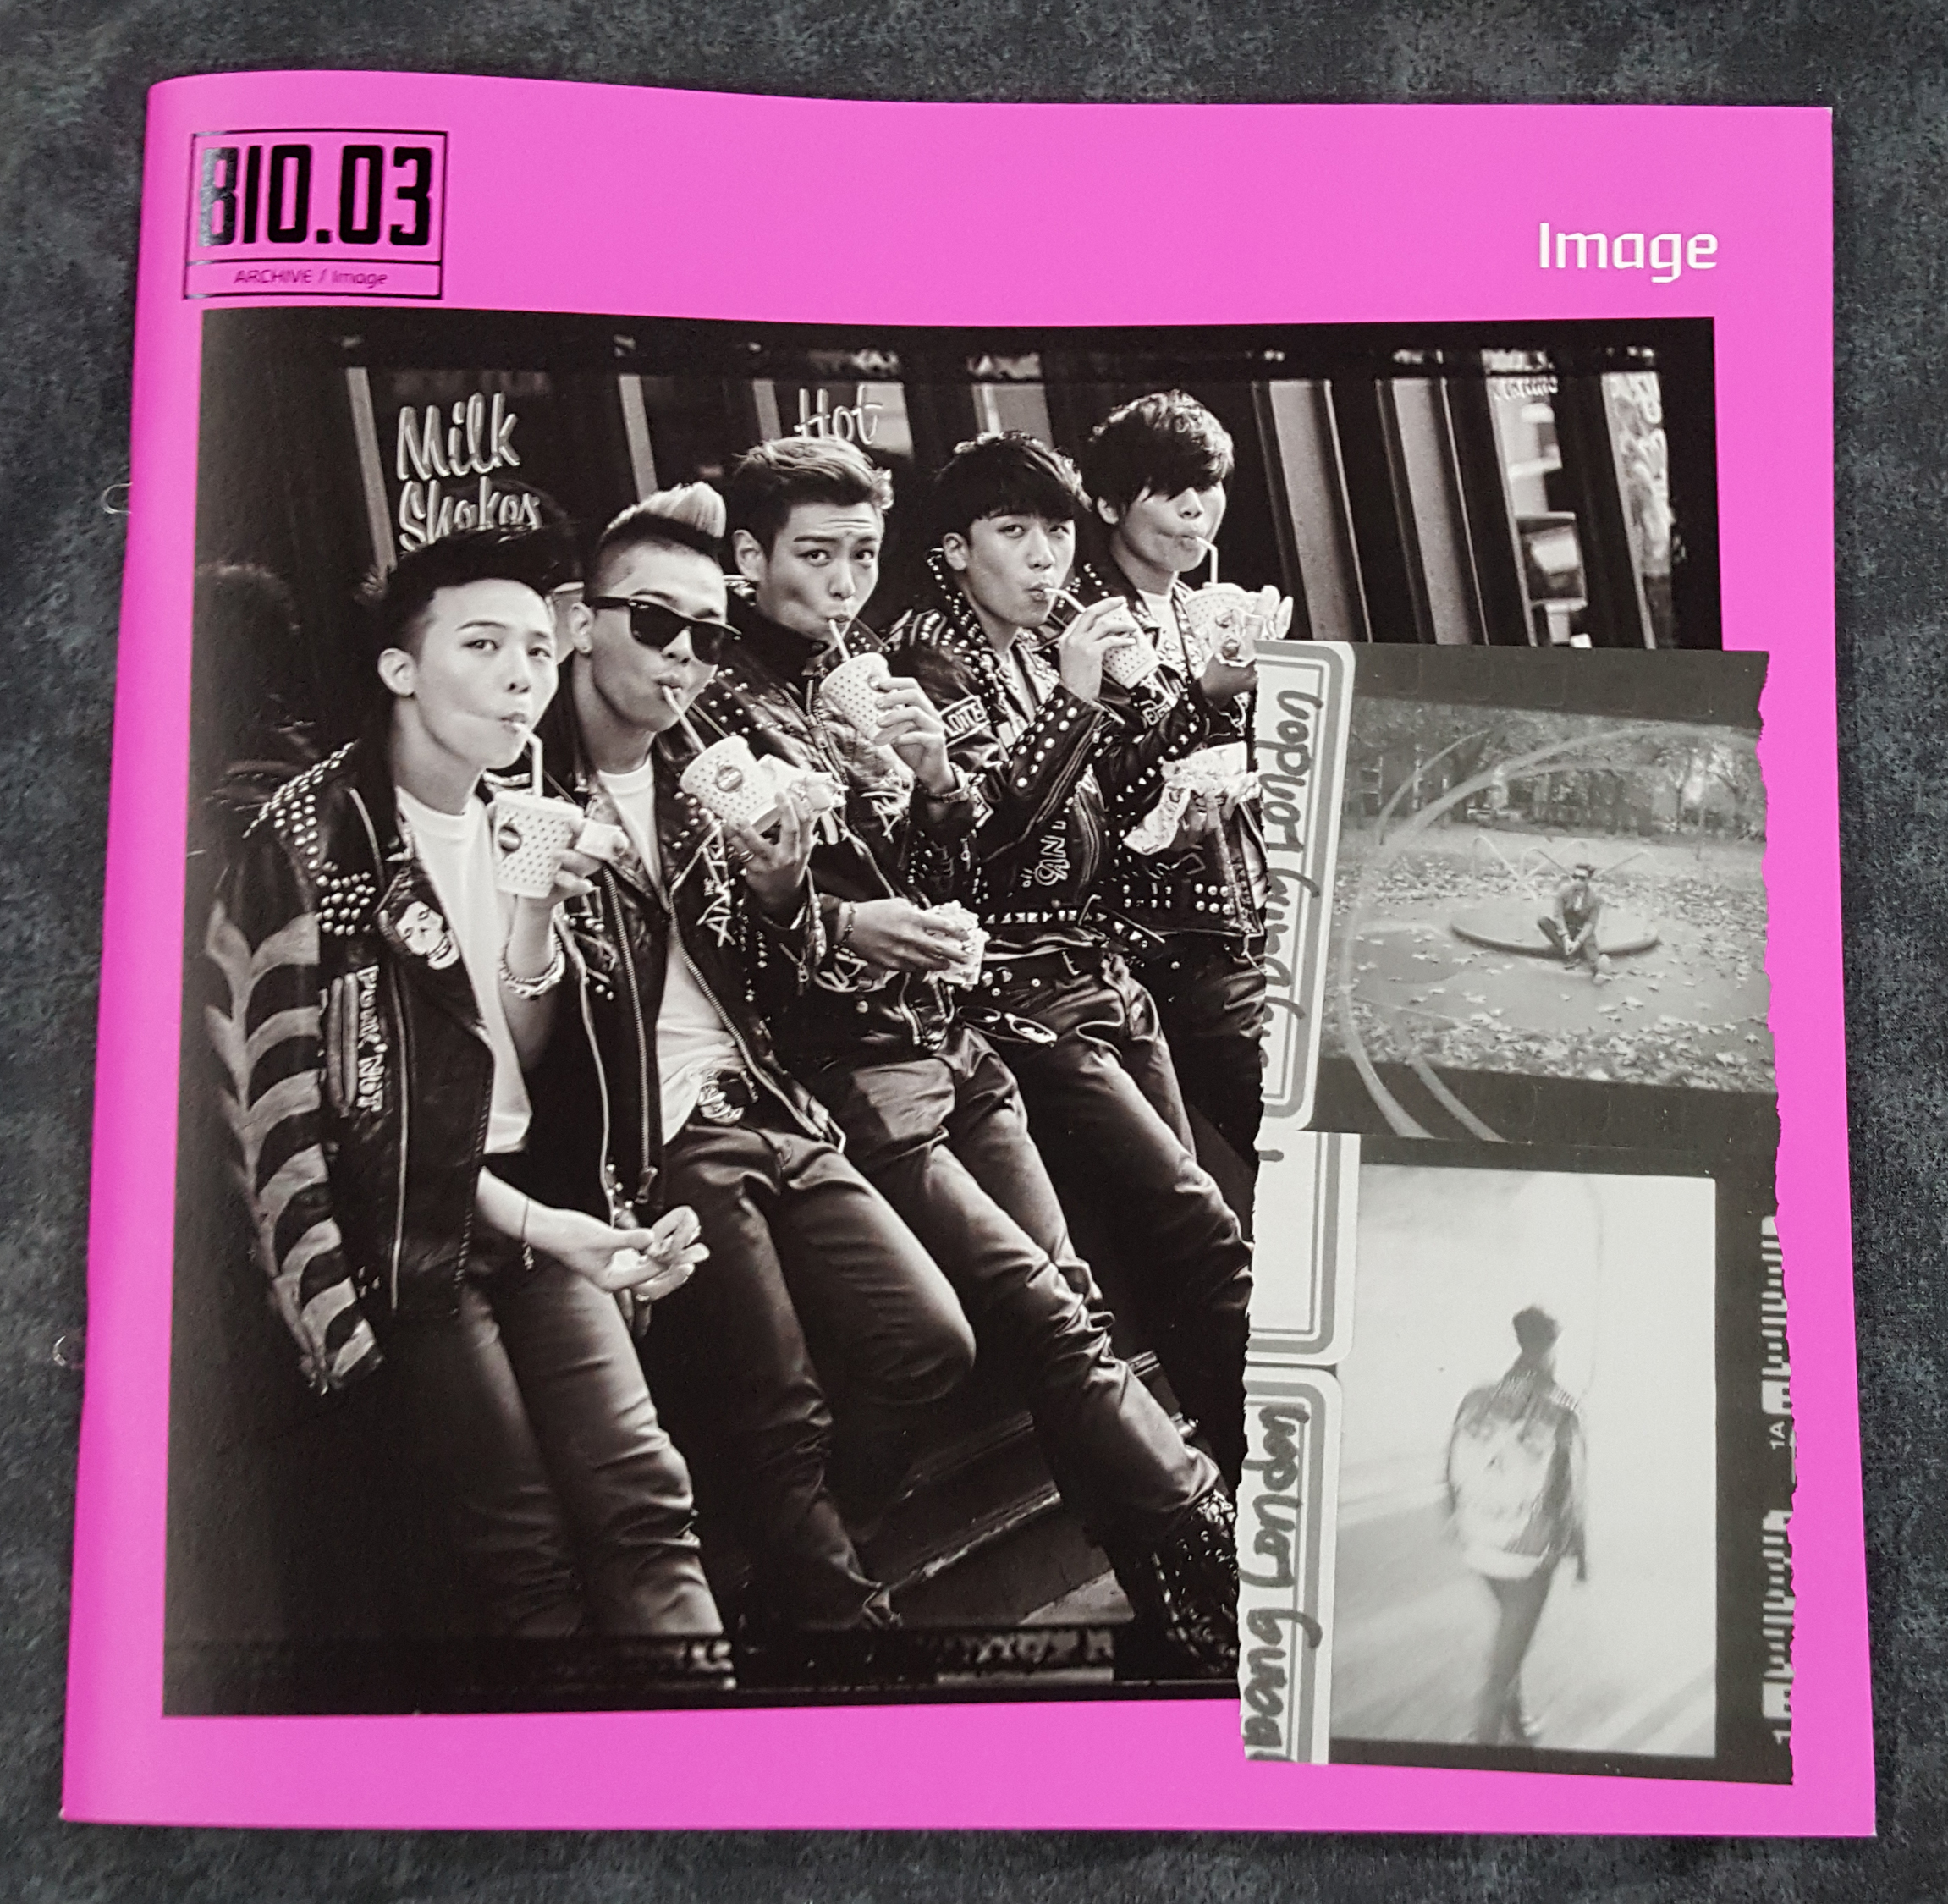 2016 - BIGBANG10 The Vinyl LP: Limited Edition (5,000 copies) — my 